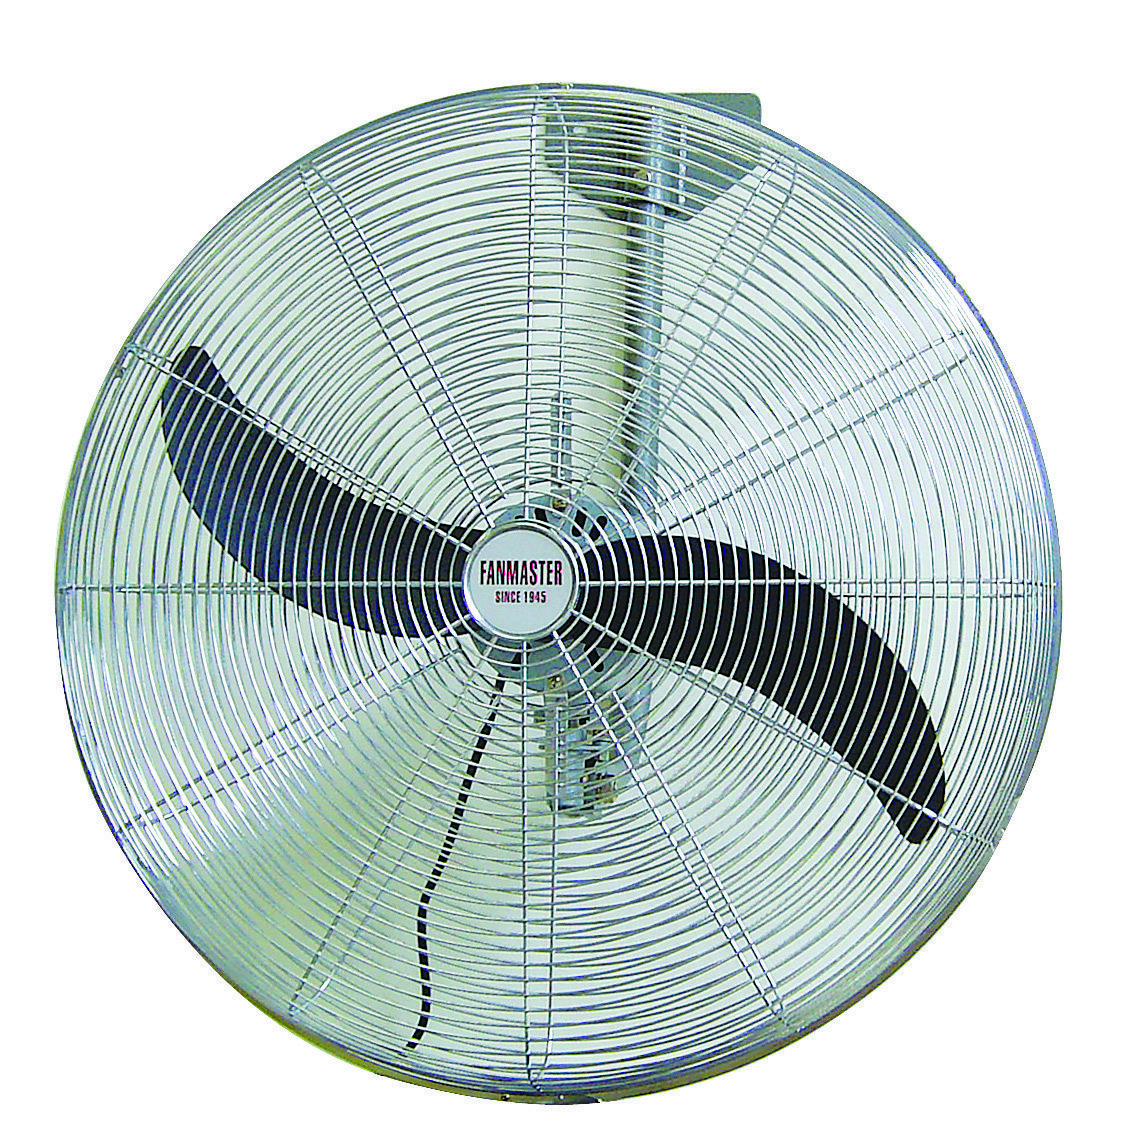 WALL MT FAN 600MM 240V 3SPD / Industrial Heating Cooling Ventilation Distribution Fans Warehouse Australia / Fanmaster